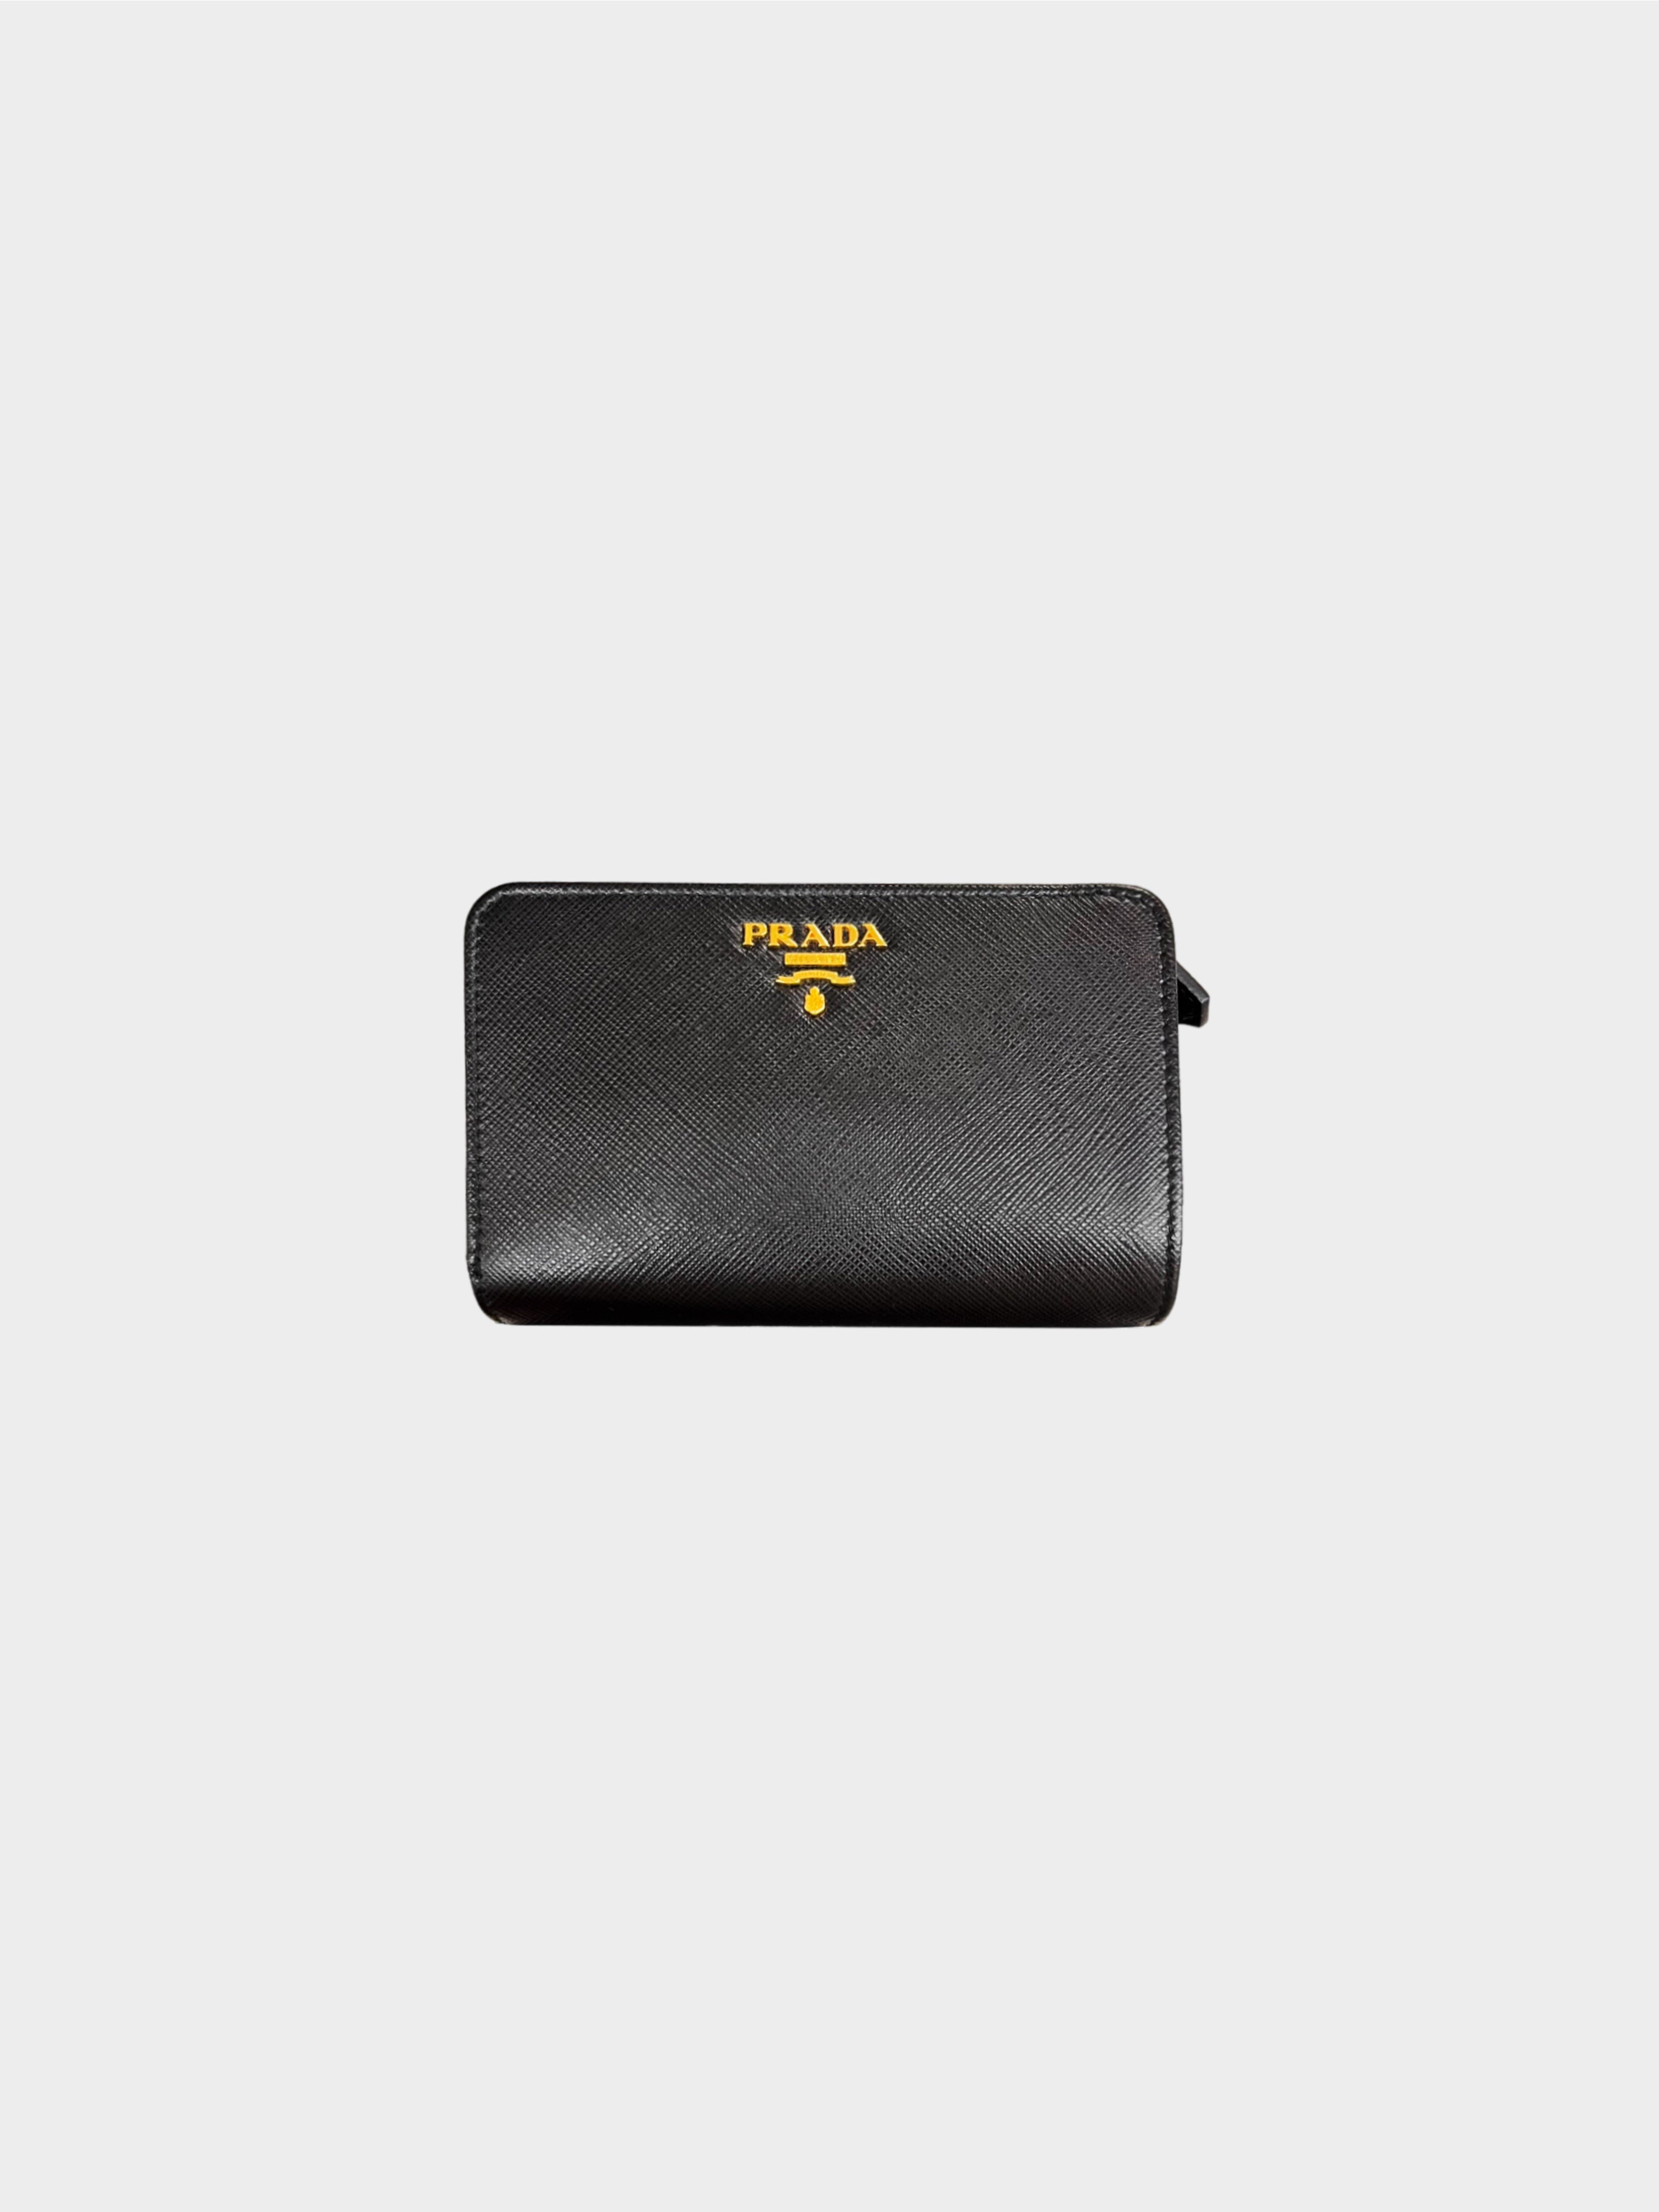 Prada 2010s Black Small Saffiano Leather Wallet